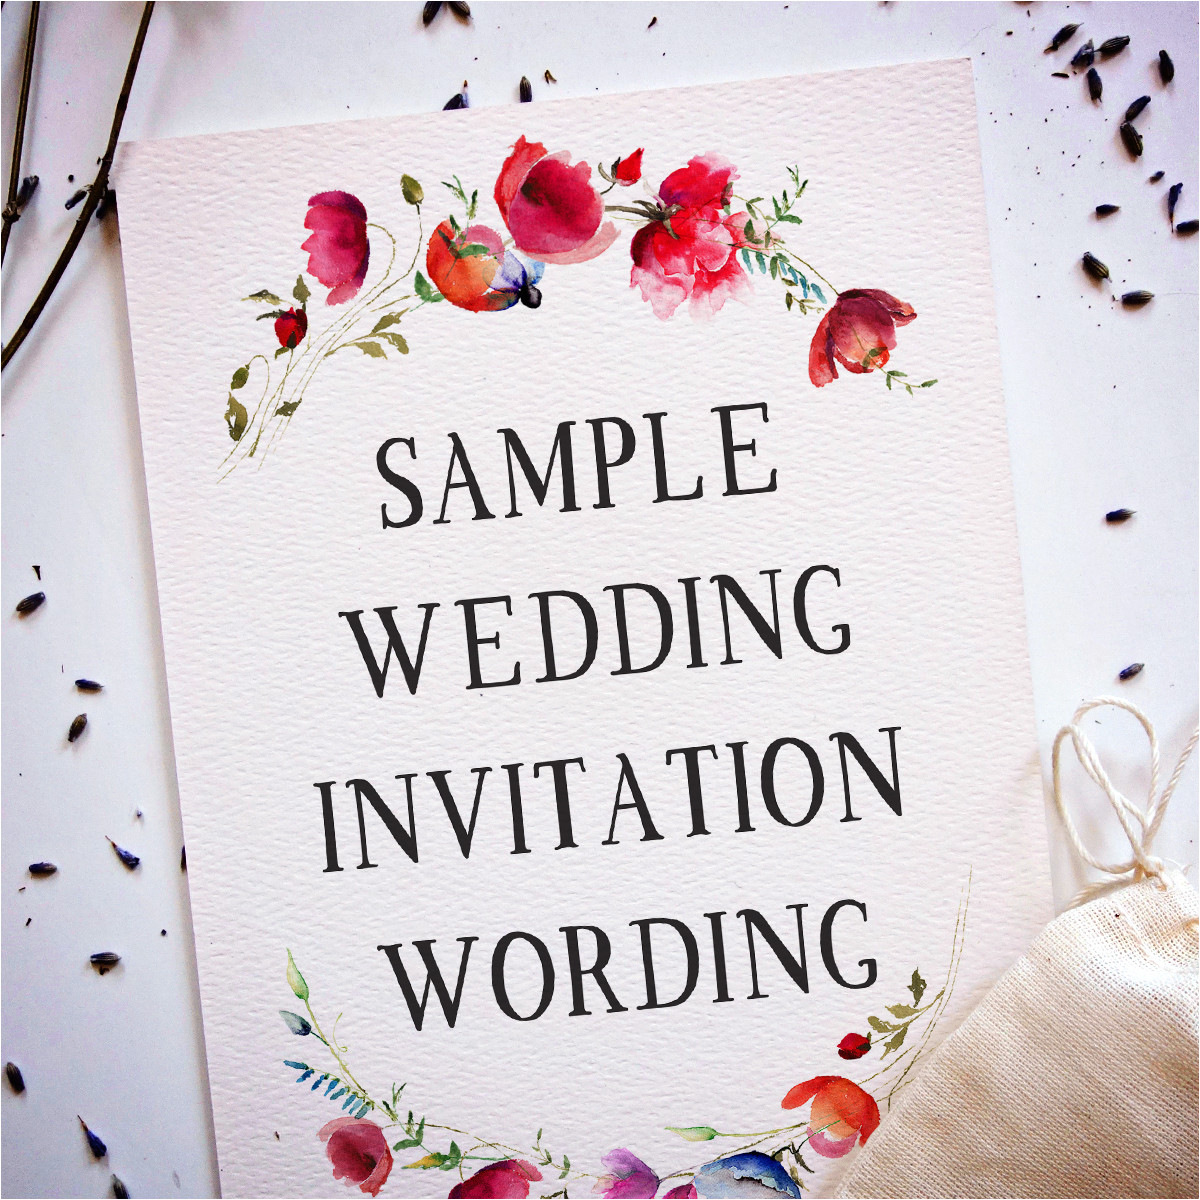 wedding wording ideas indian wedding invitations 2016